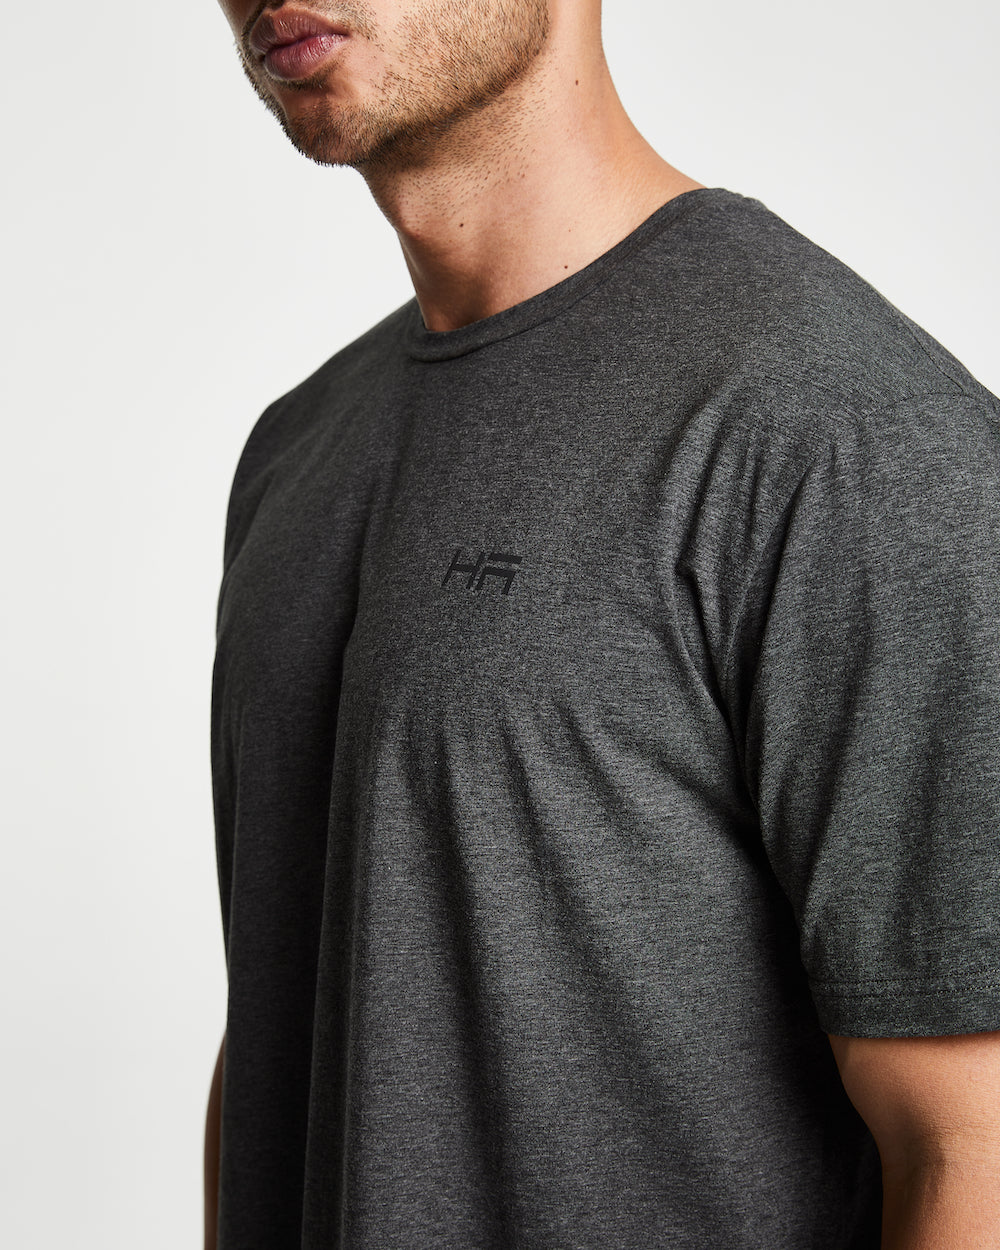 Aro Essential Gym T-Shirt - Charcoal Grey